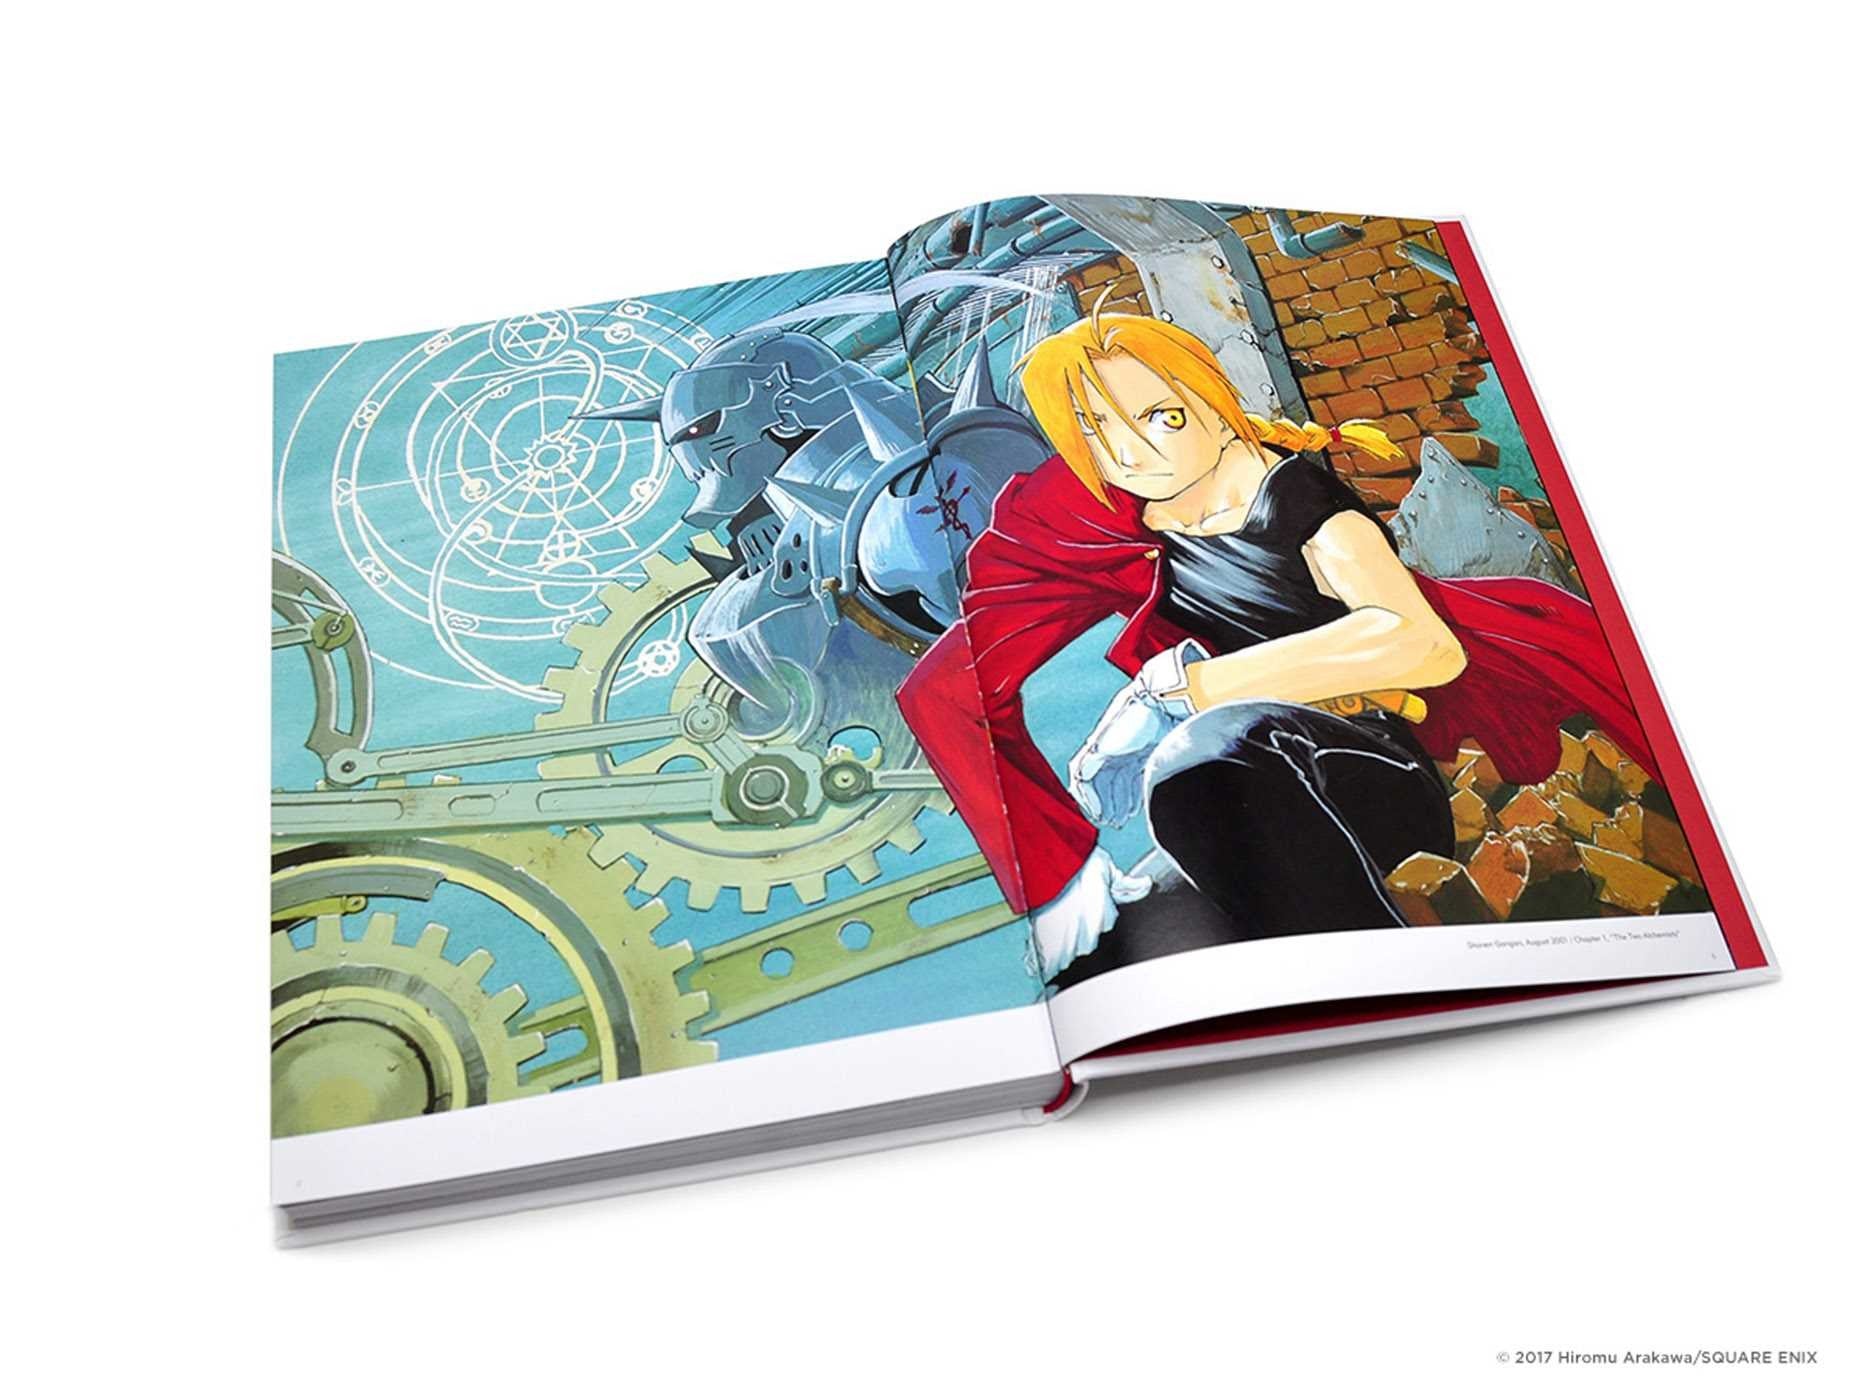 The Complete Art of Fullmetal Alchemist (Artbook)